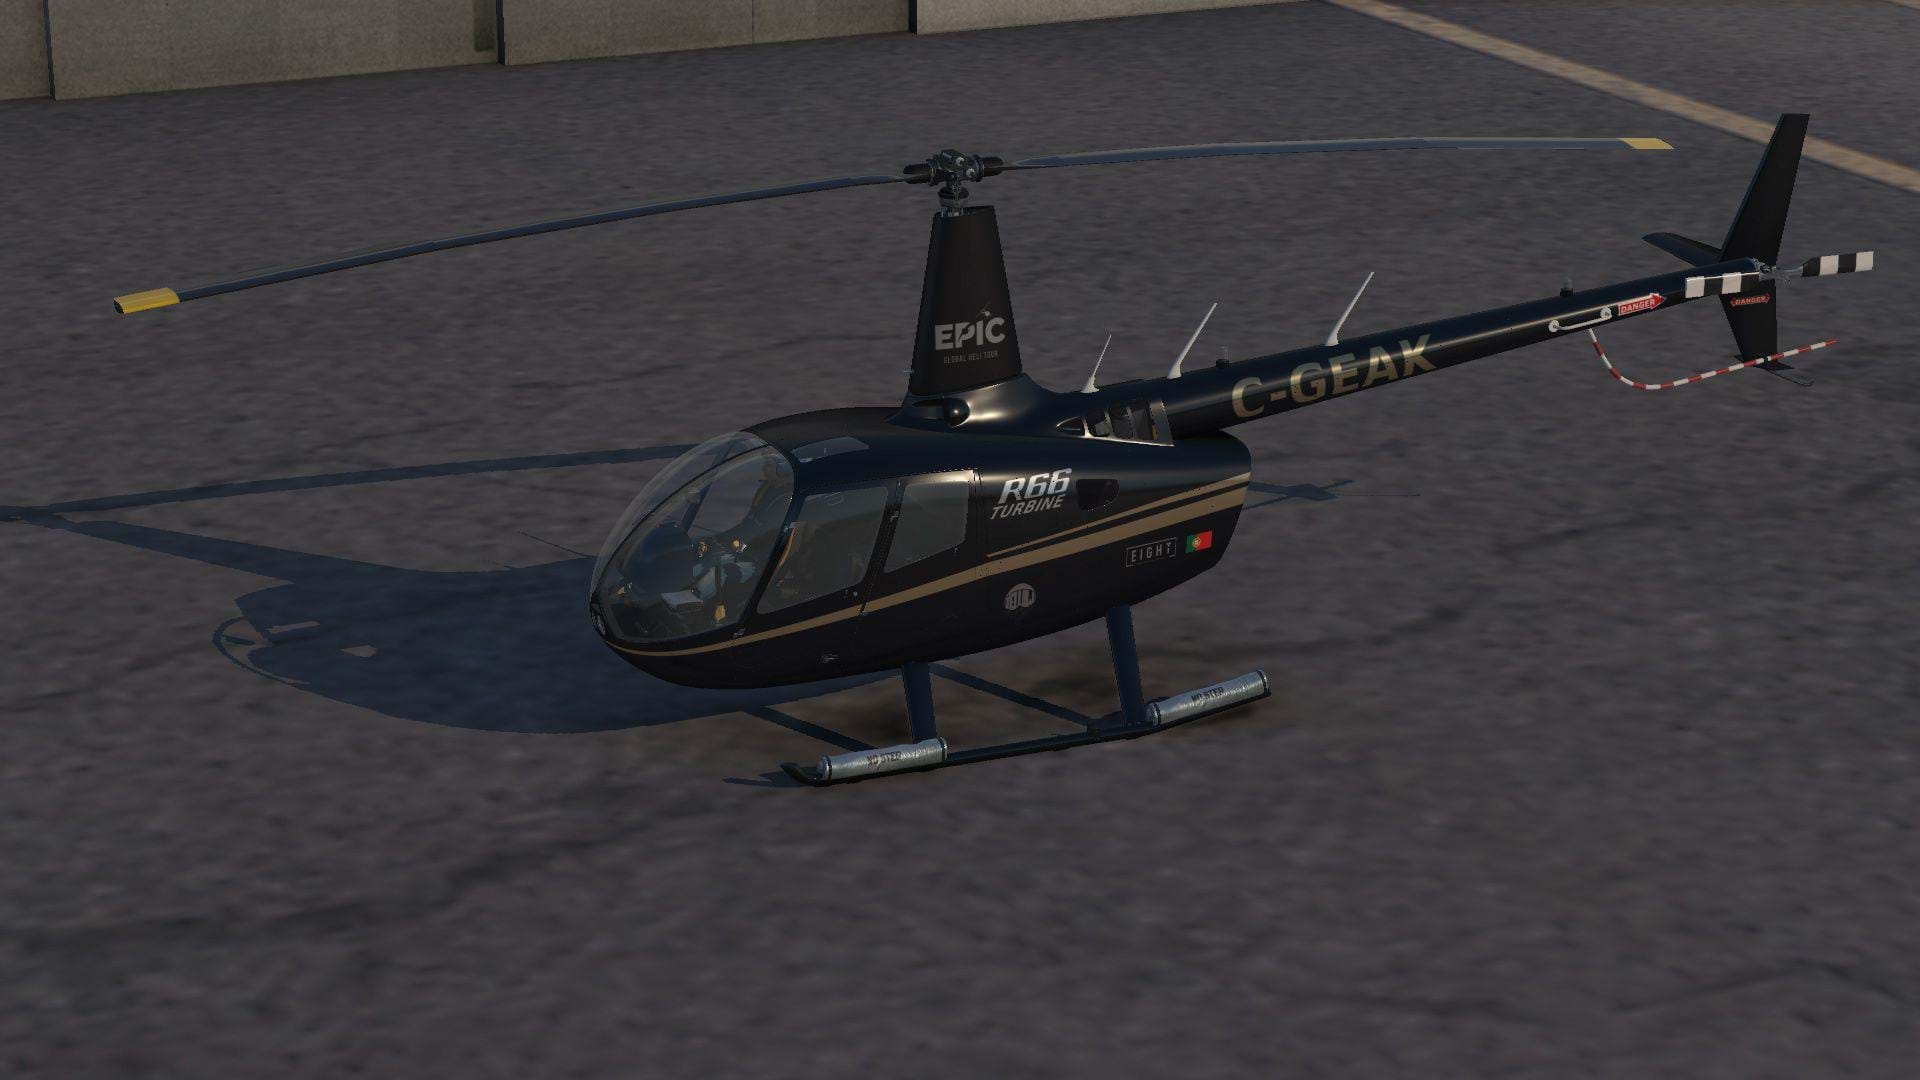 VSKYLABS R66 for X-Plane